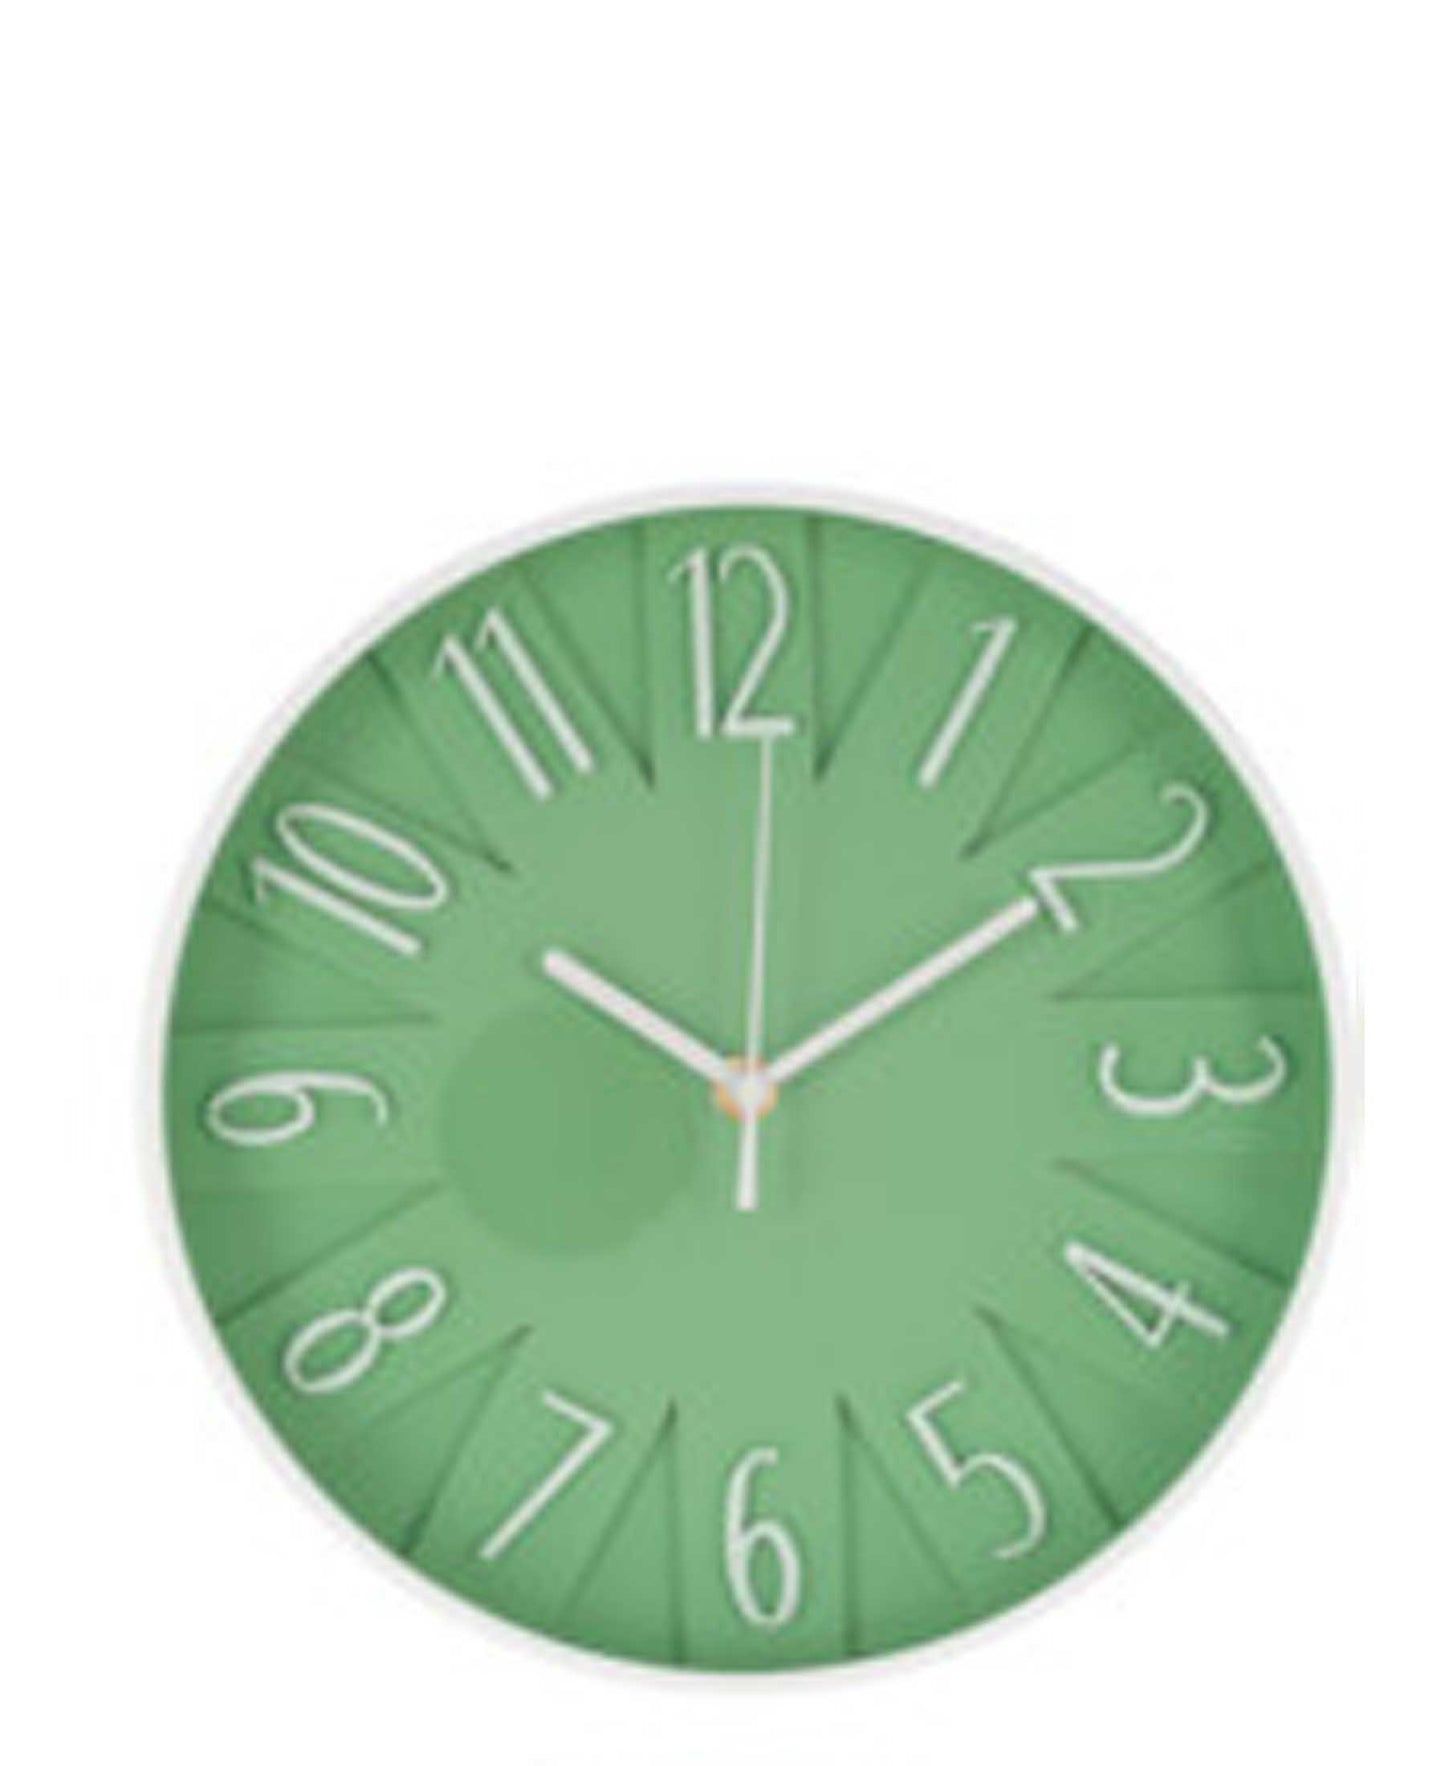 Urban Decor 24.8cm Wall Clock - Green & White